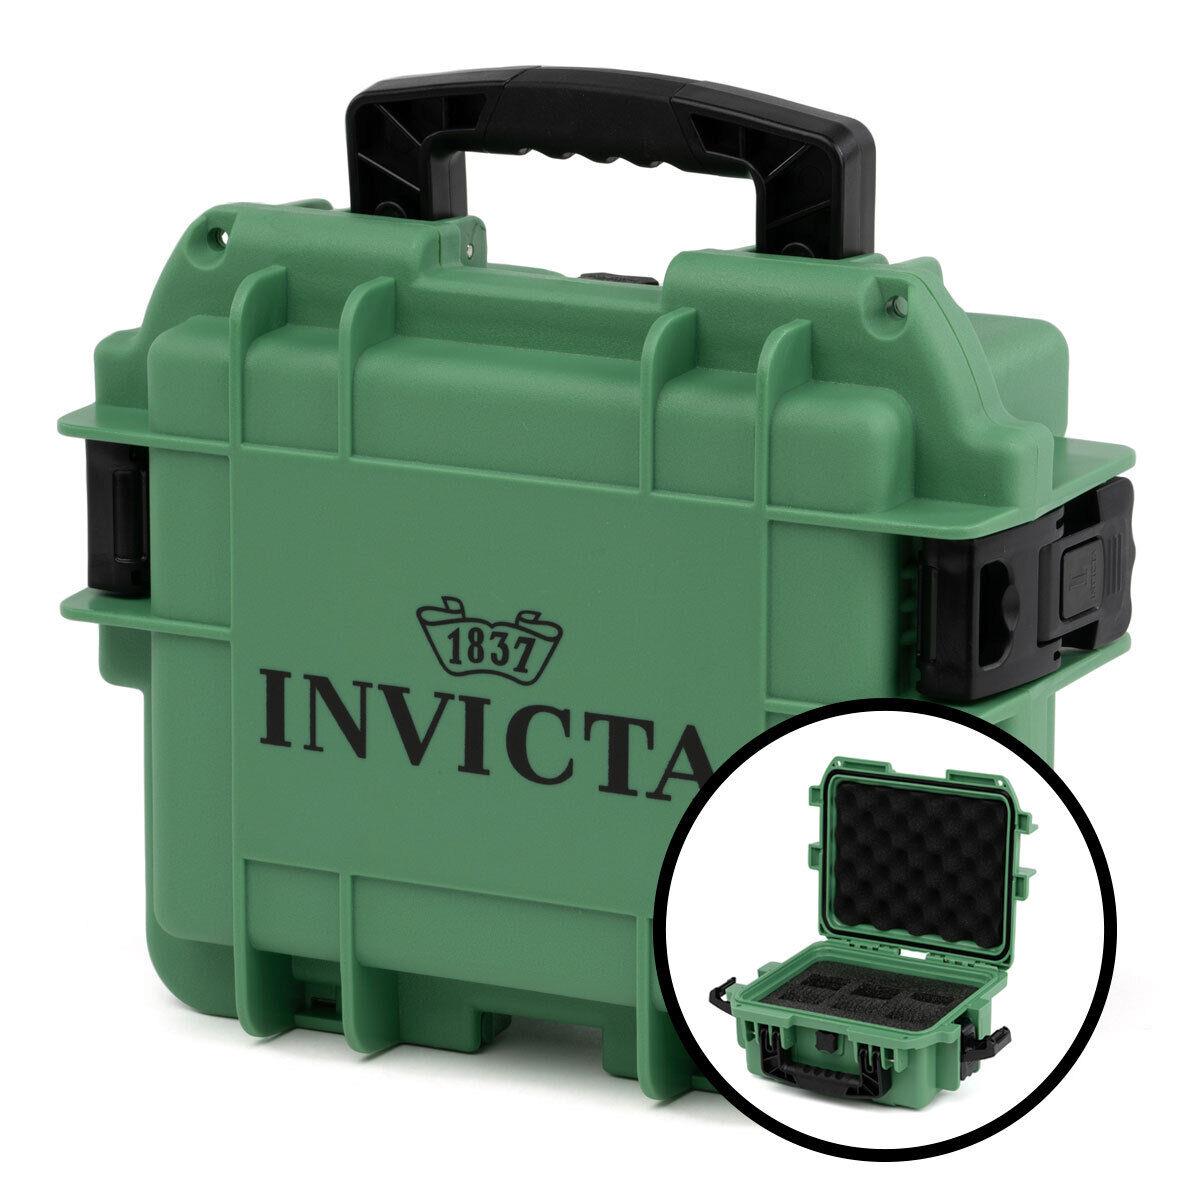 Invicta 3-Slot Impact Green Color Collectors Waterproof Watch Case DC3-LTGRN